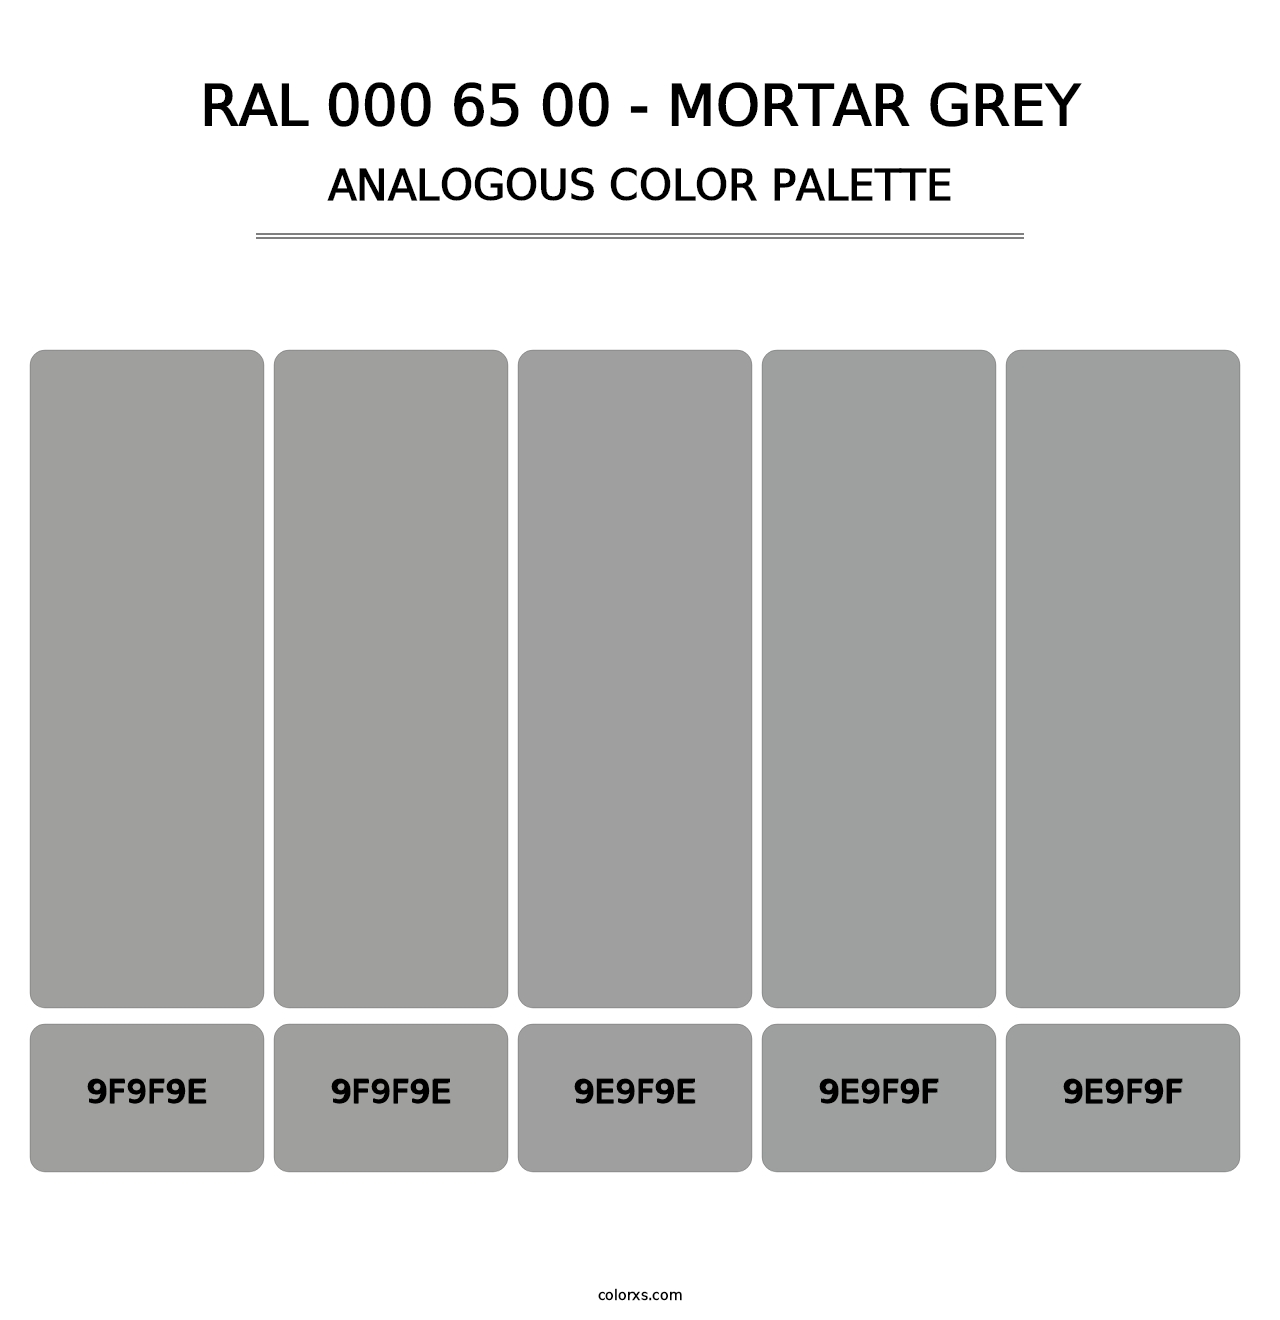 RAL 000 65 00 - Mortar Grey - Analogous Color Palette